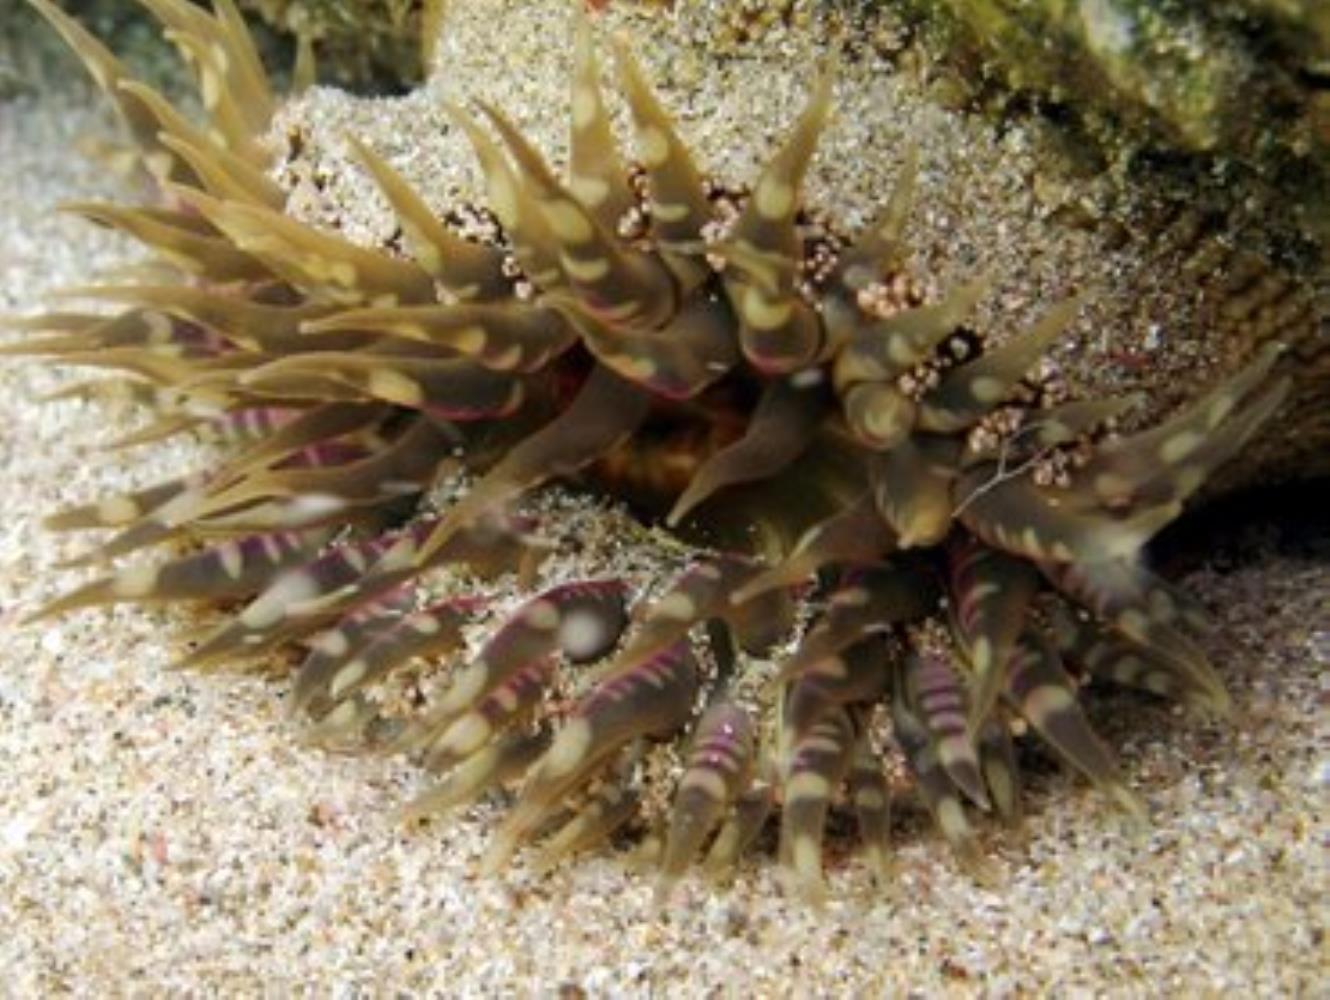 Warty Sea Anemone